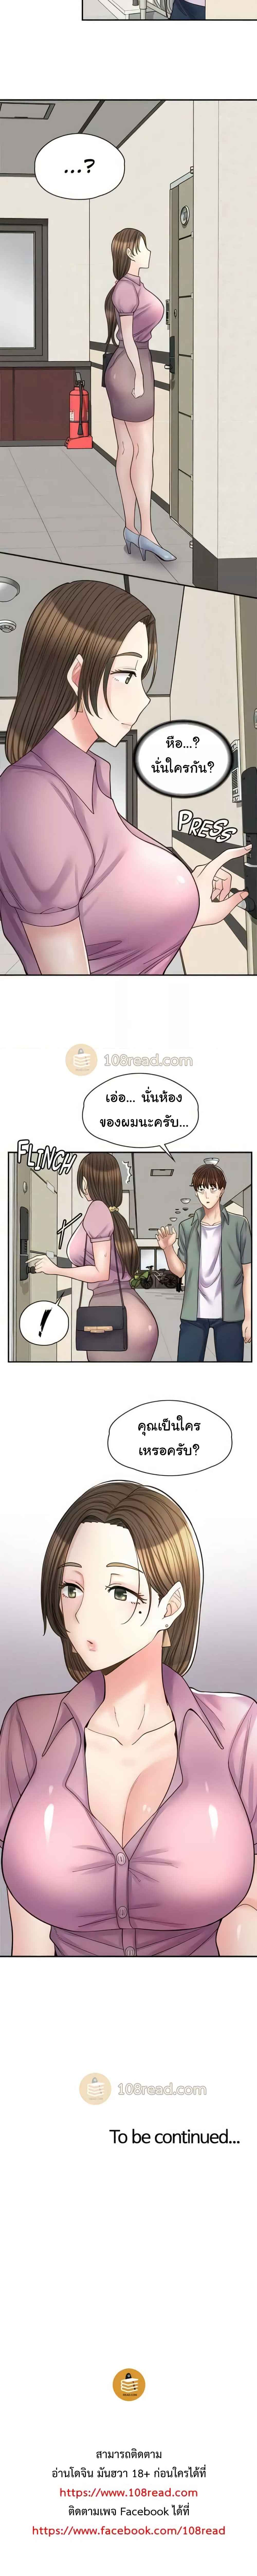 Erotic Manga Café Girls 12 (6)